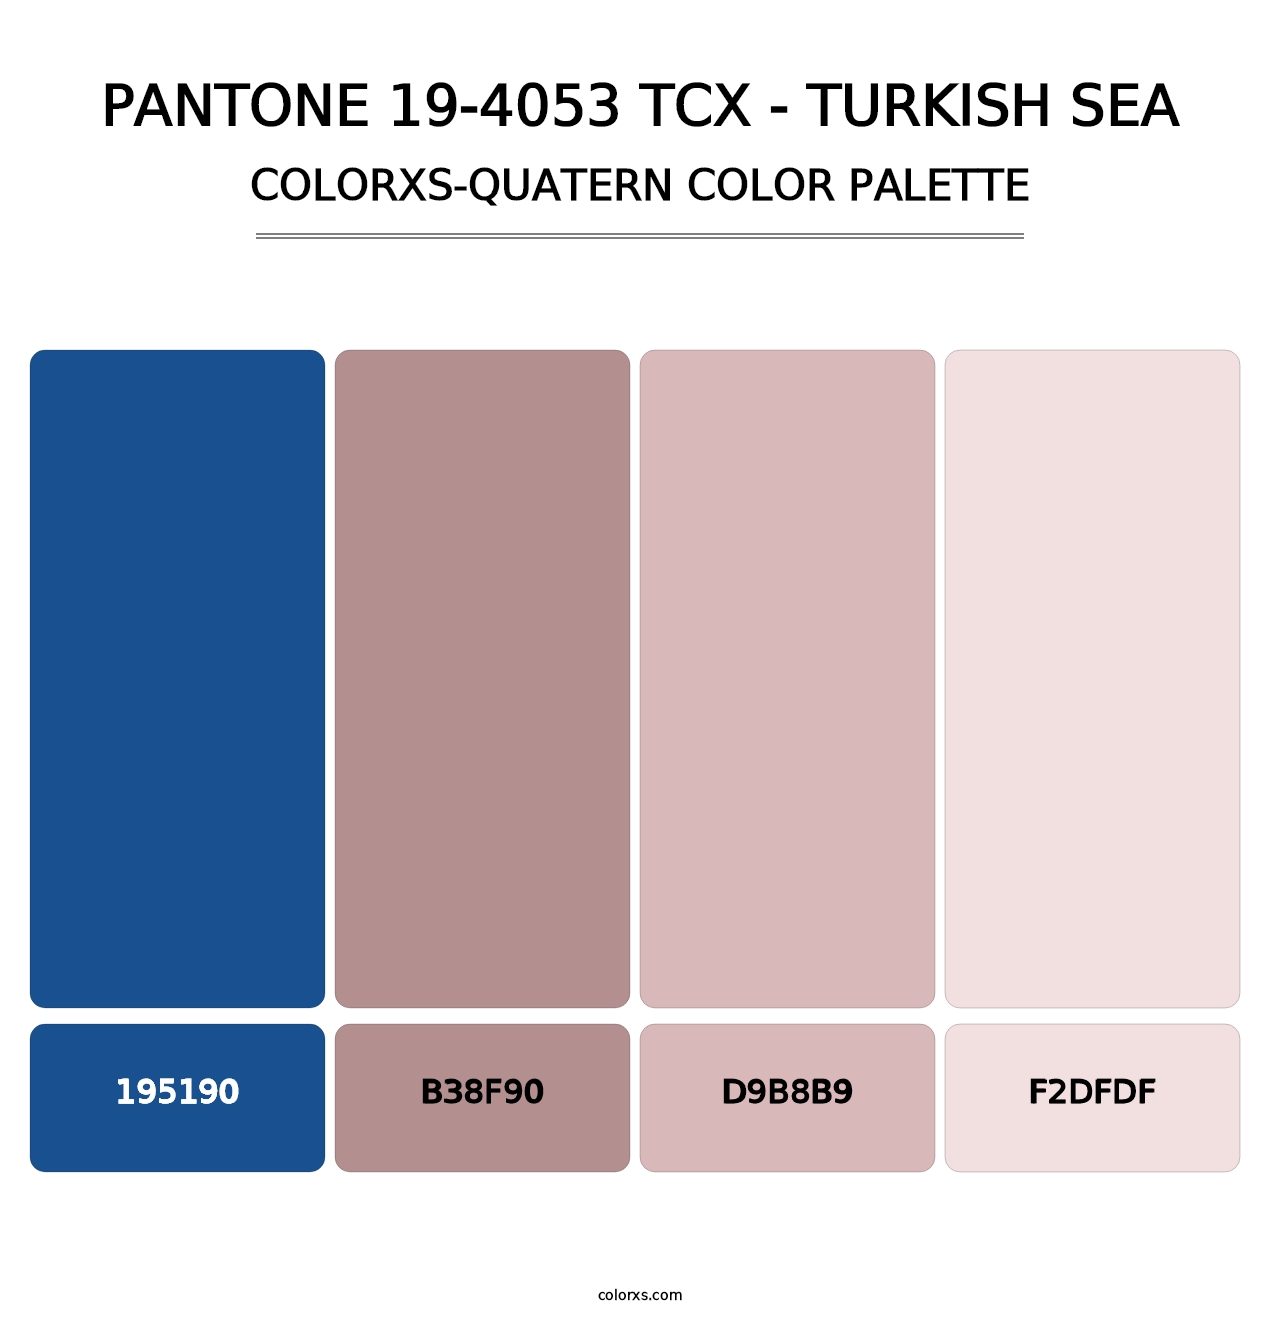 PANTONE 19-4053 TCX - Turkish Sea - Colorxs Quatern Palette